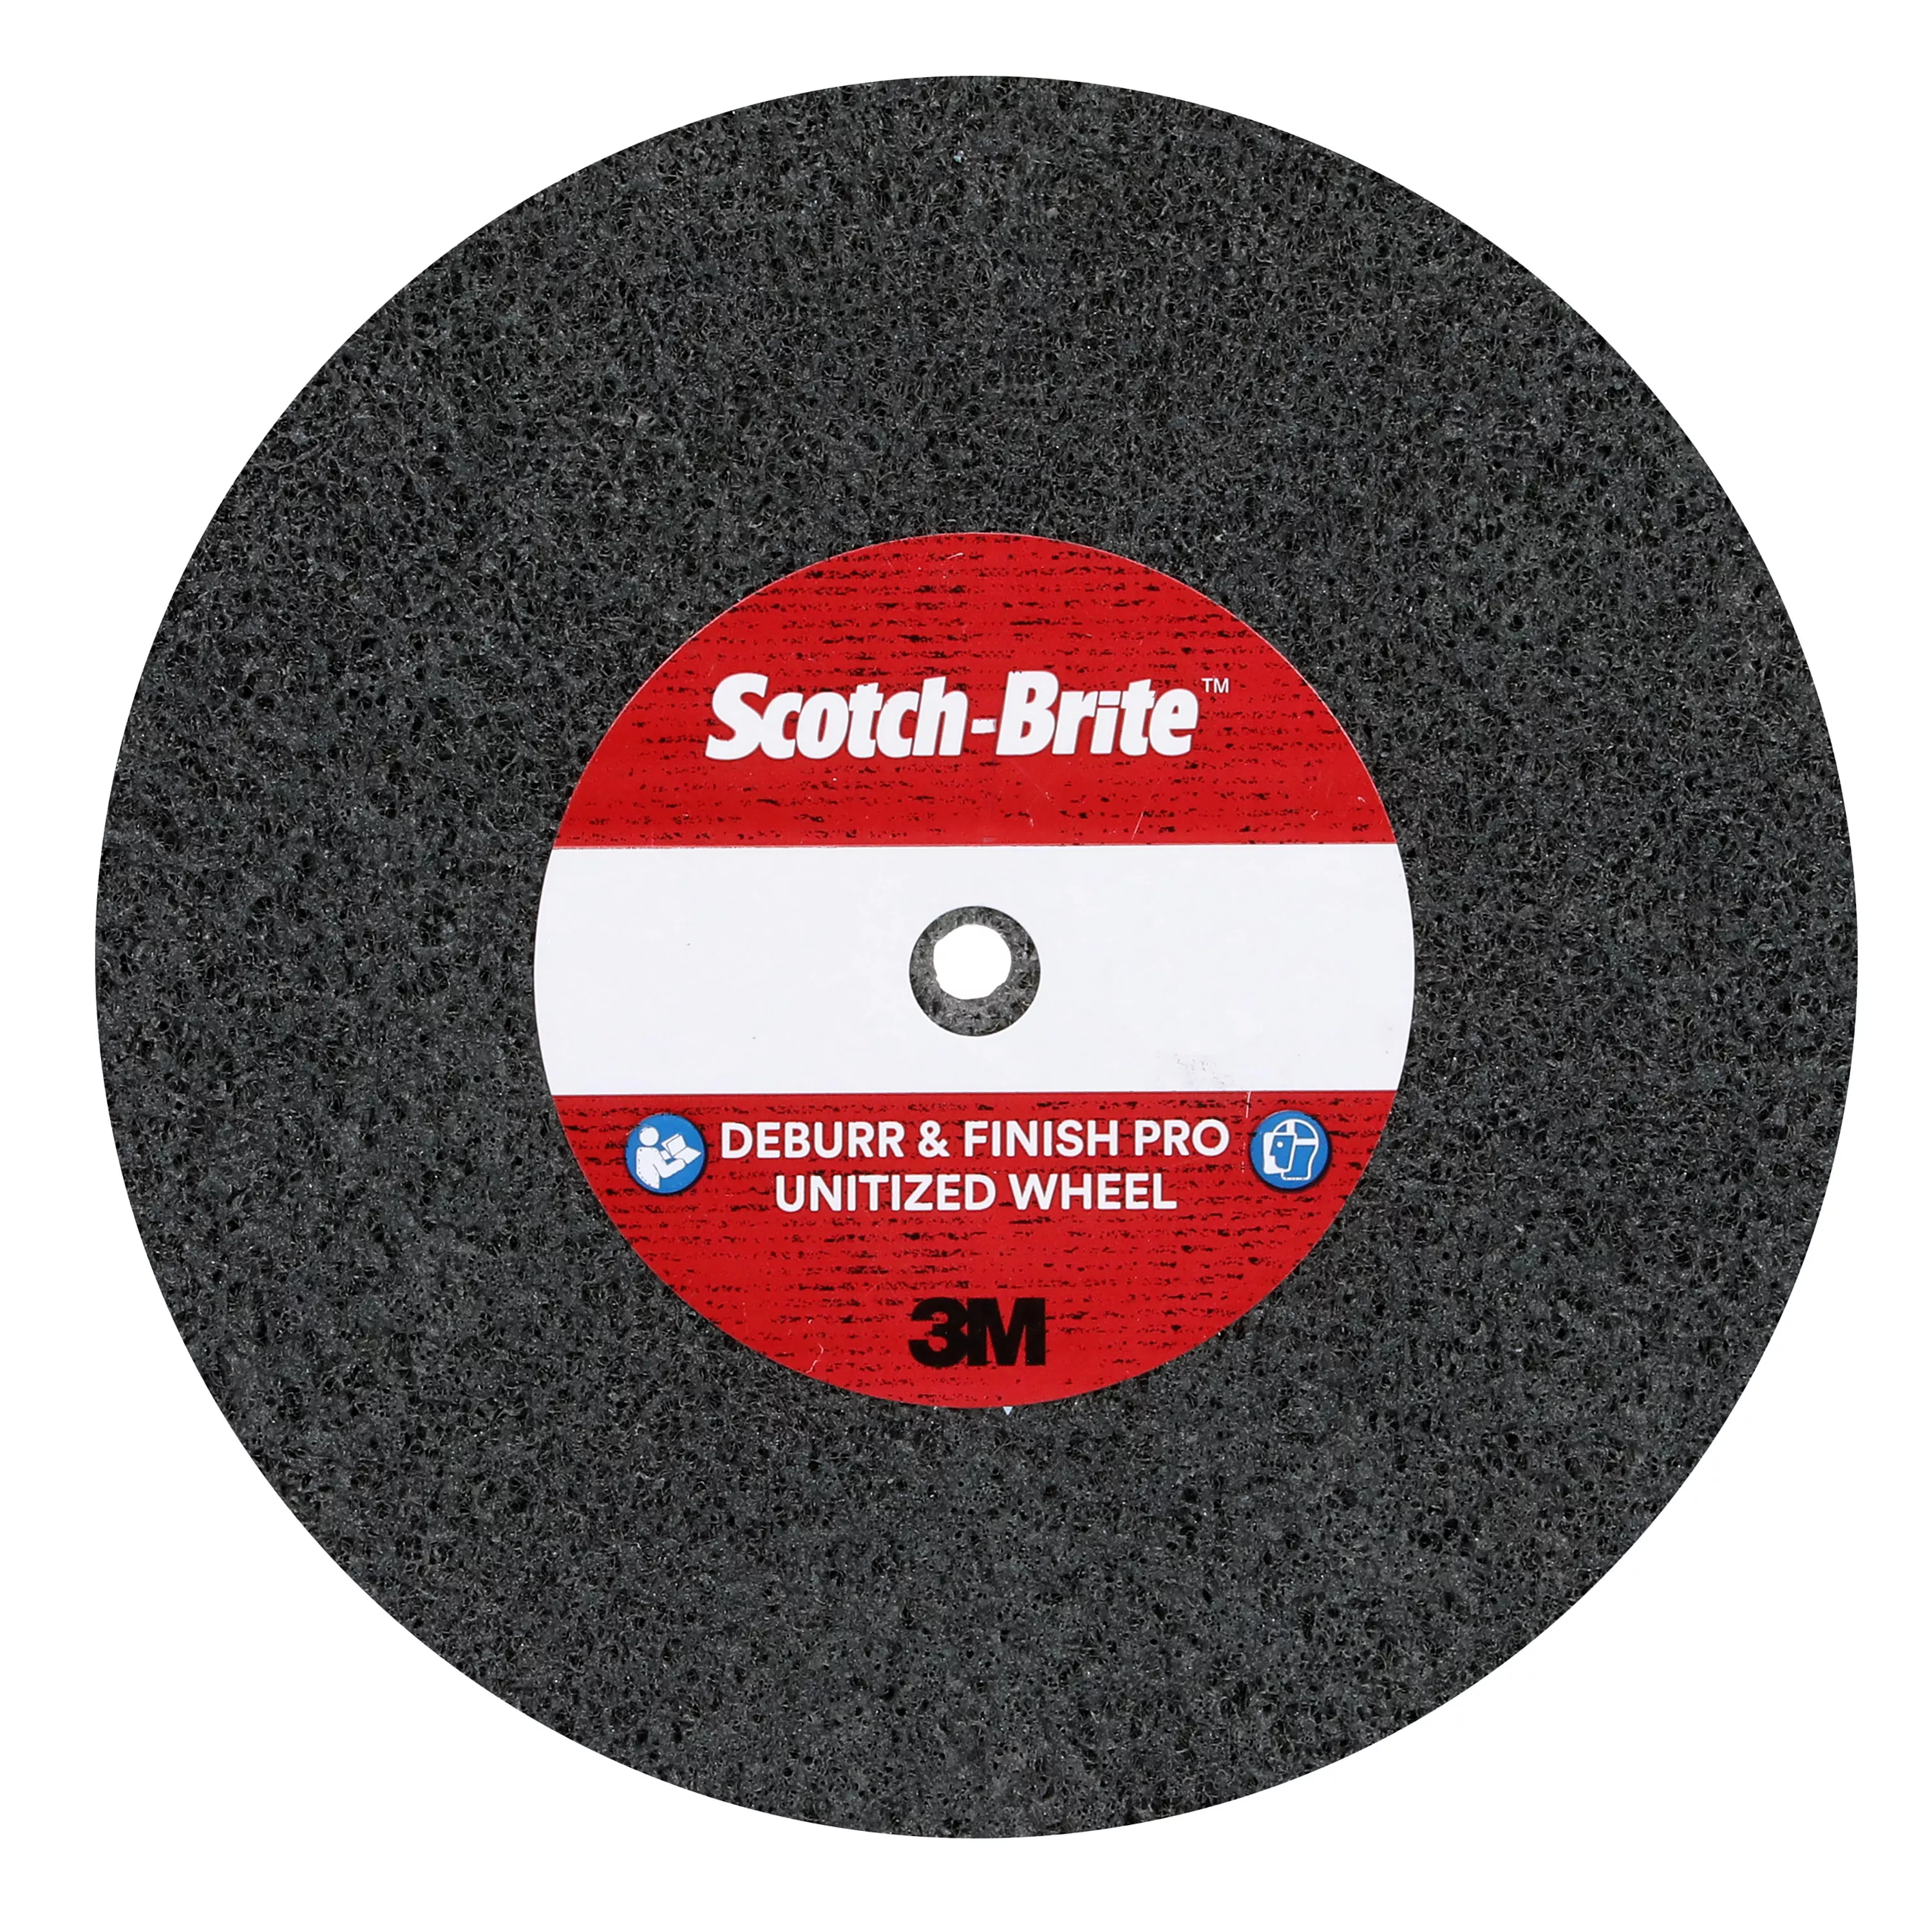 SKU 7100143466 | Scotch-Brite™ Deburr & Finish Pro Unitized Wheel